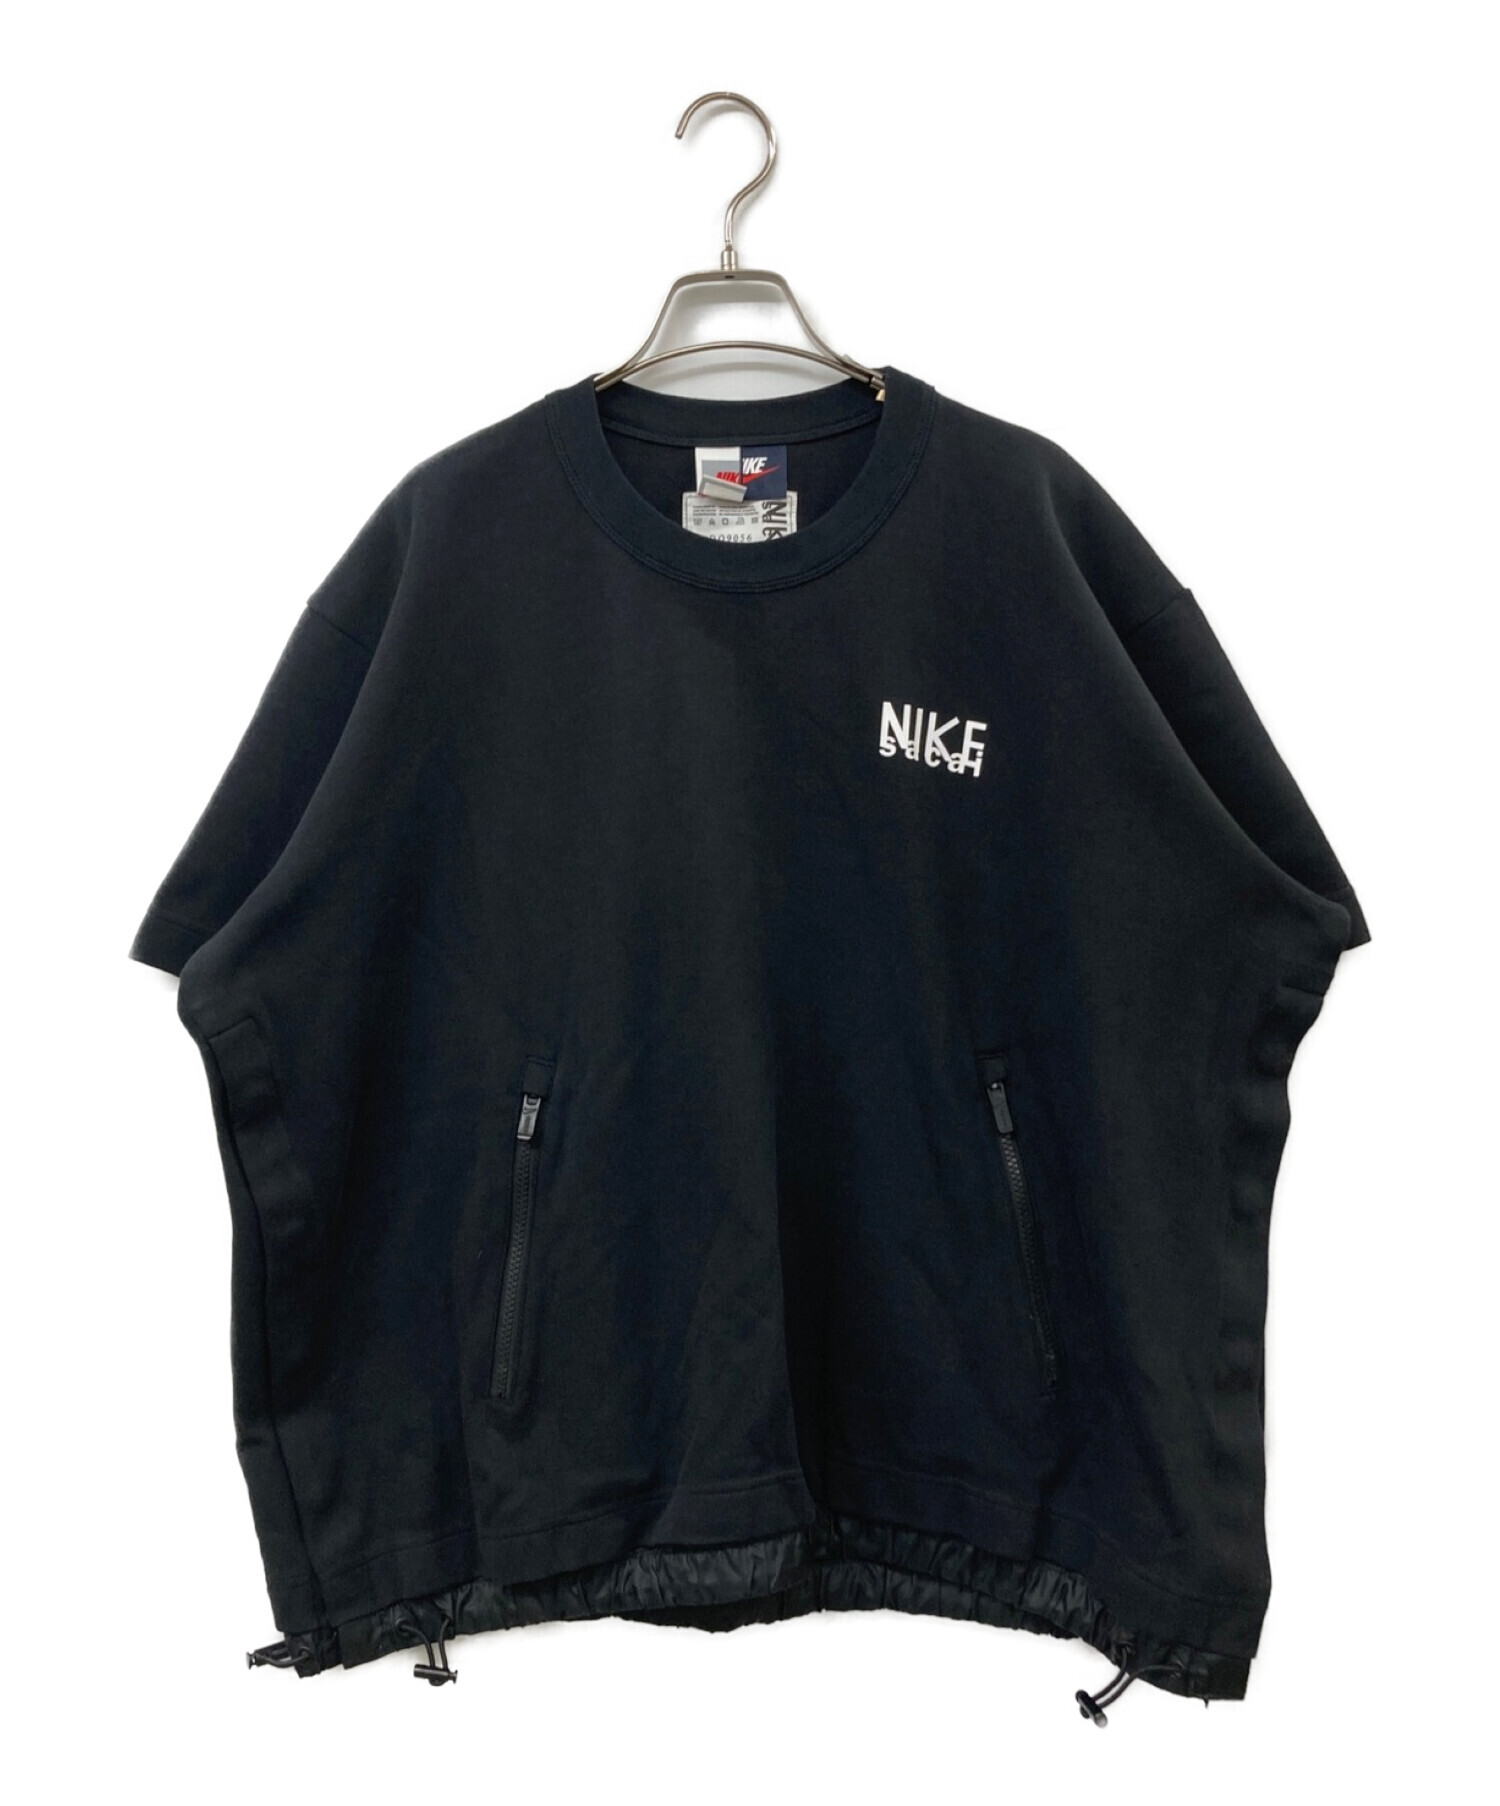 NIKE (ナイキ) sacai (サカイ) AS U NRG Ss Top ウエストドローコードロゴプリントTシャツ ブラック サイズ:2XL